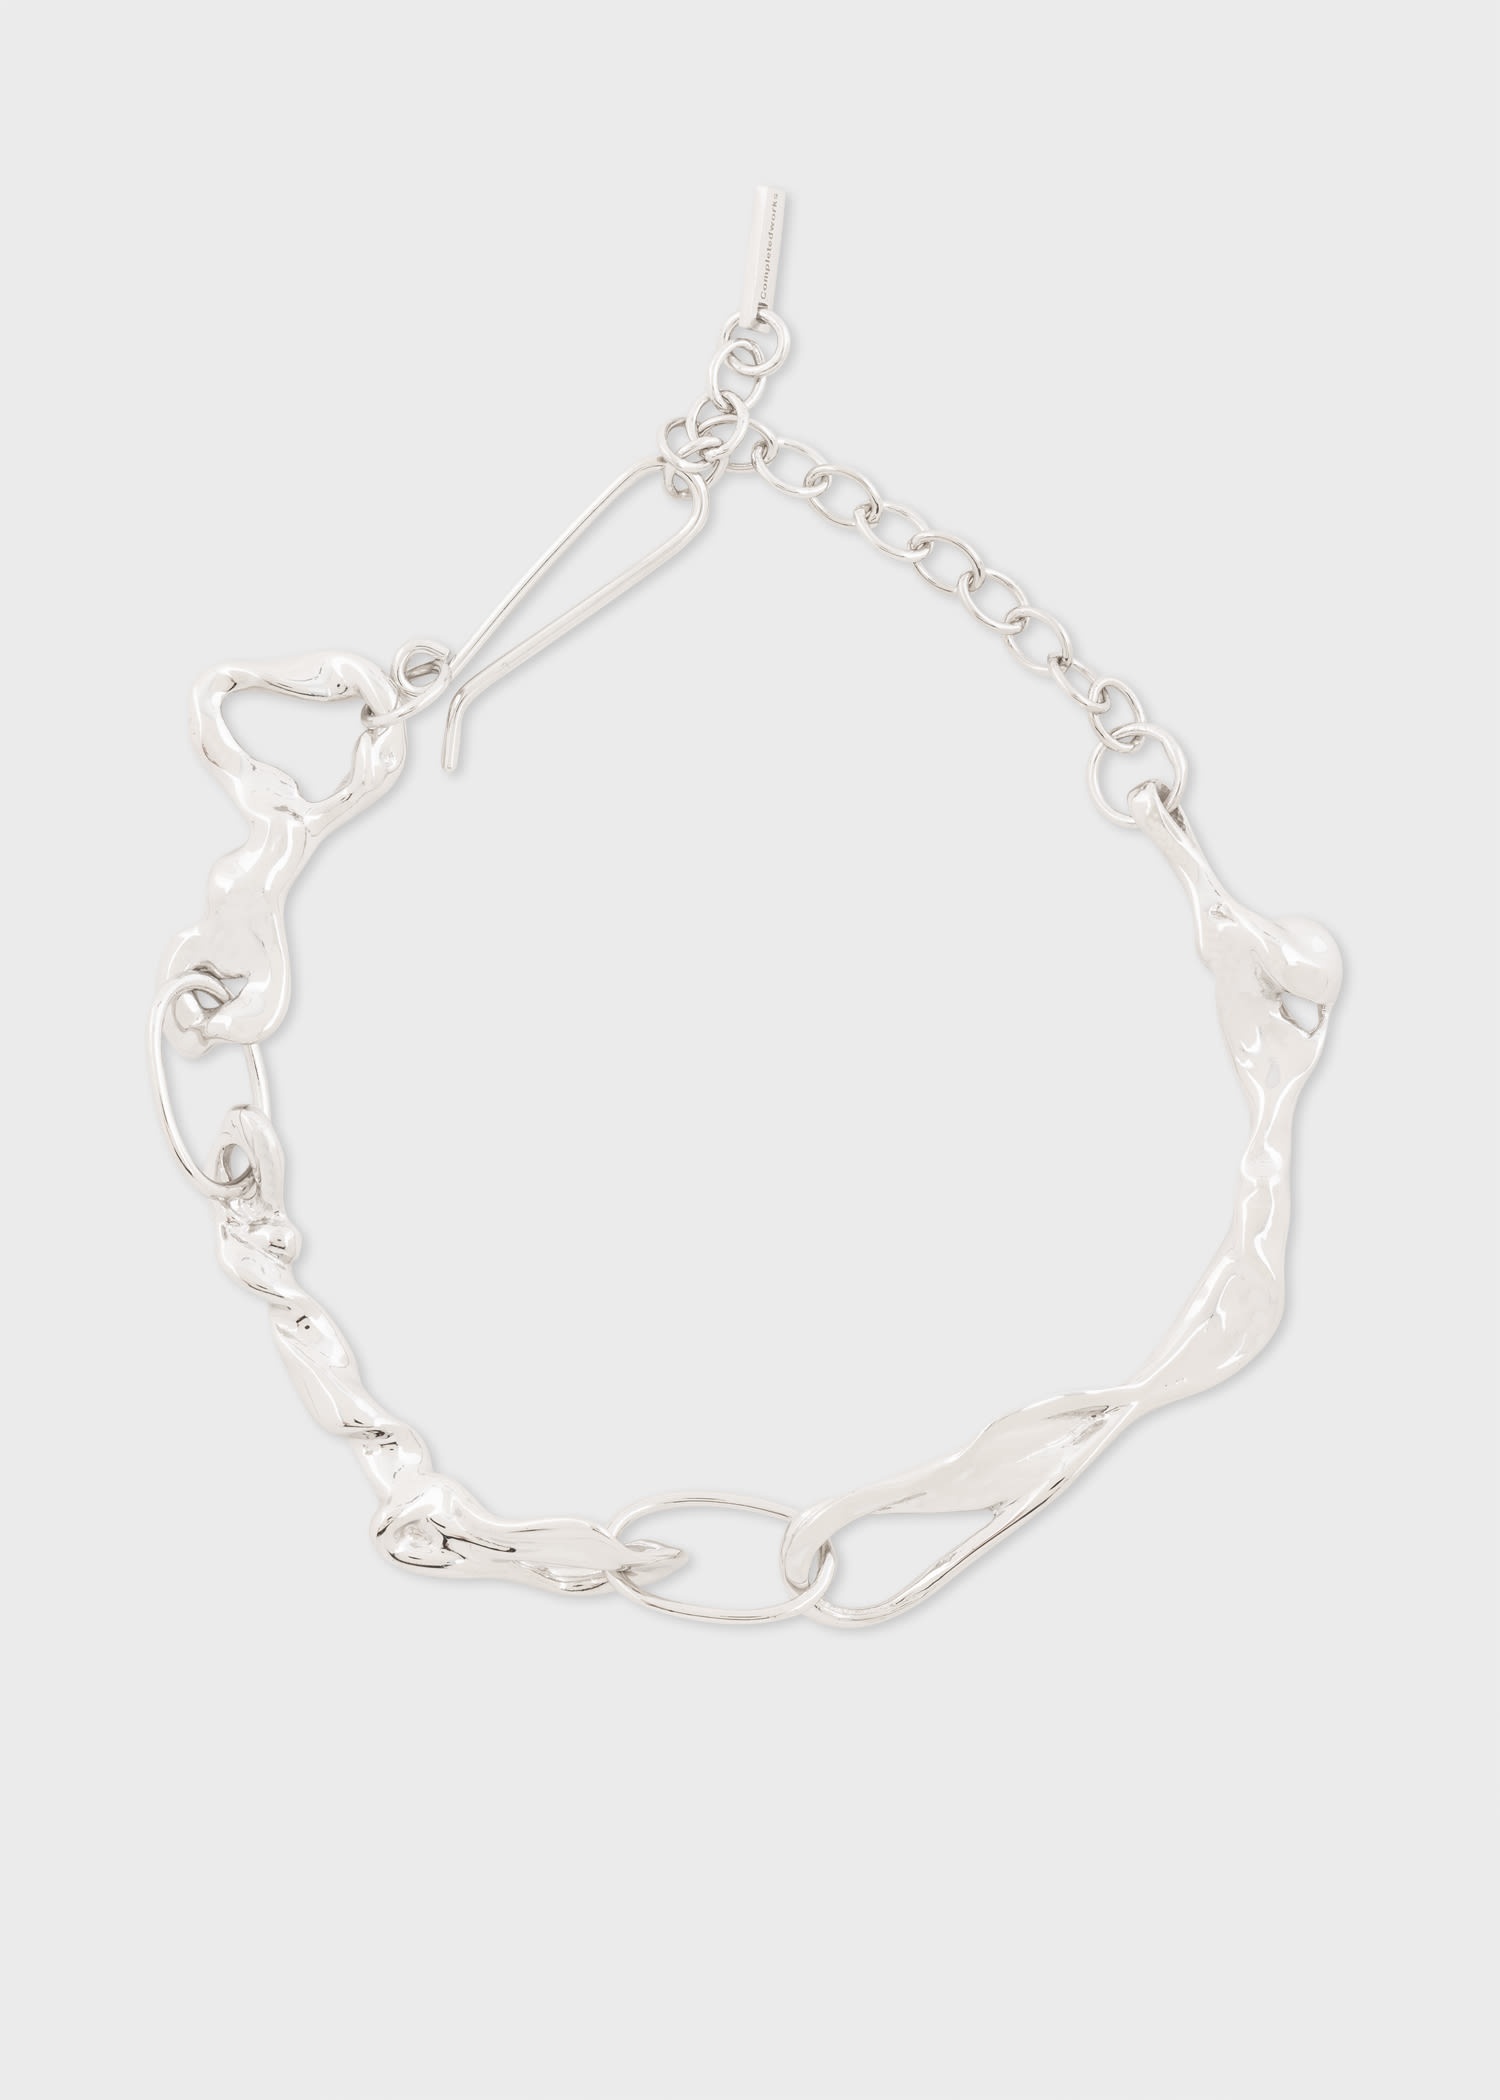 'Treacle' Rhodium Bracelet by Completedworks - 1